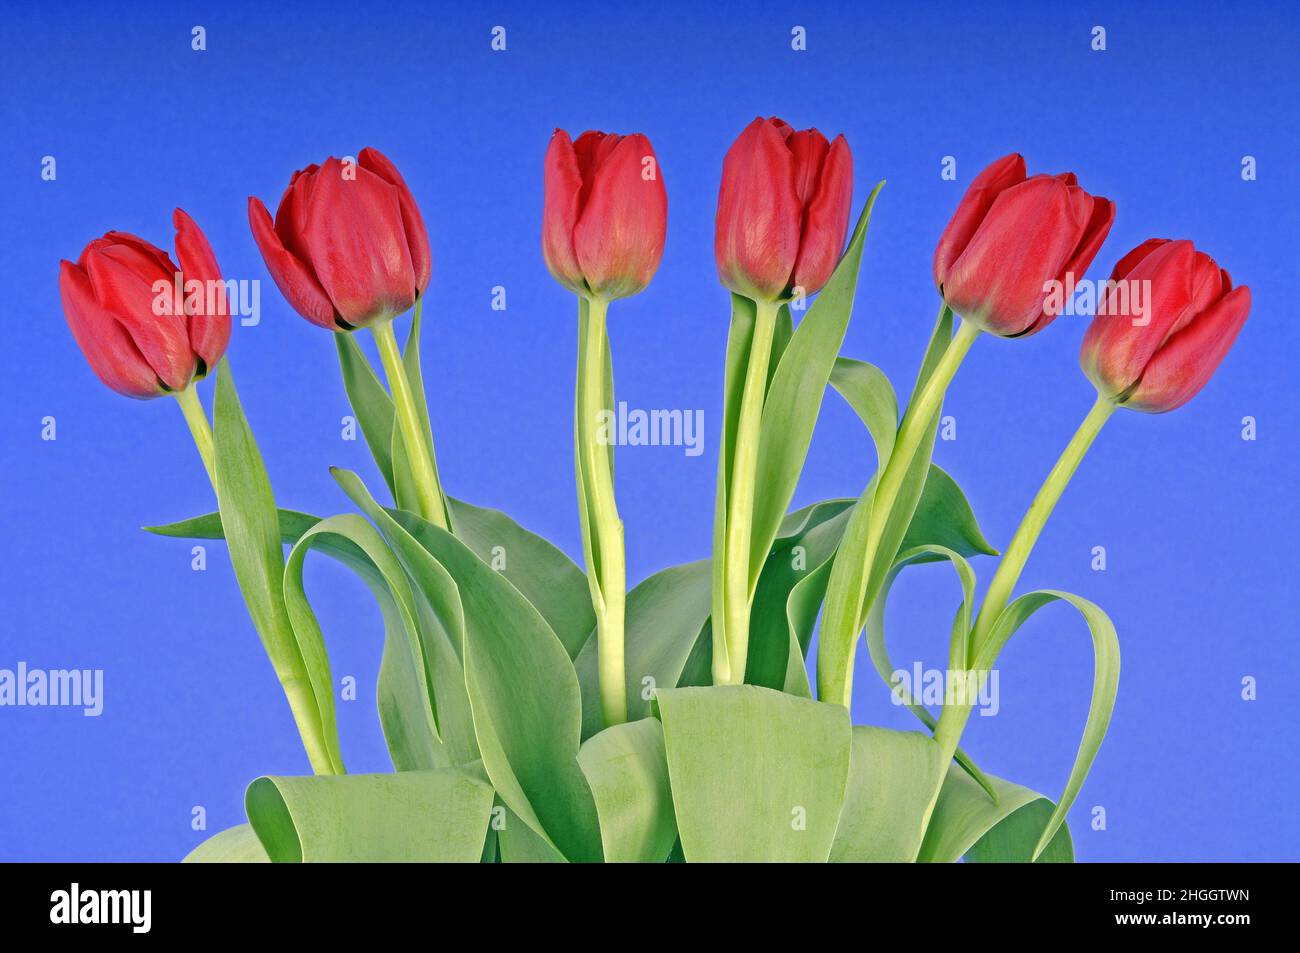 common garden tulip (Tulipa gesneriana), bunch of tulips in front of blue background Stock Photo